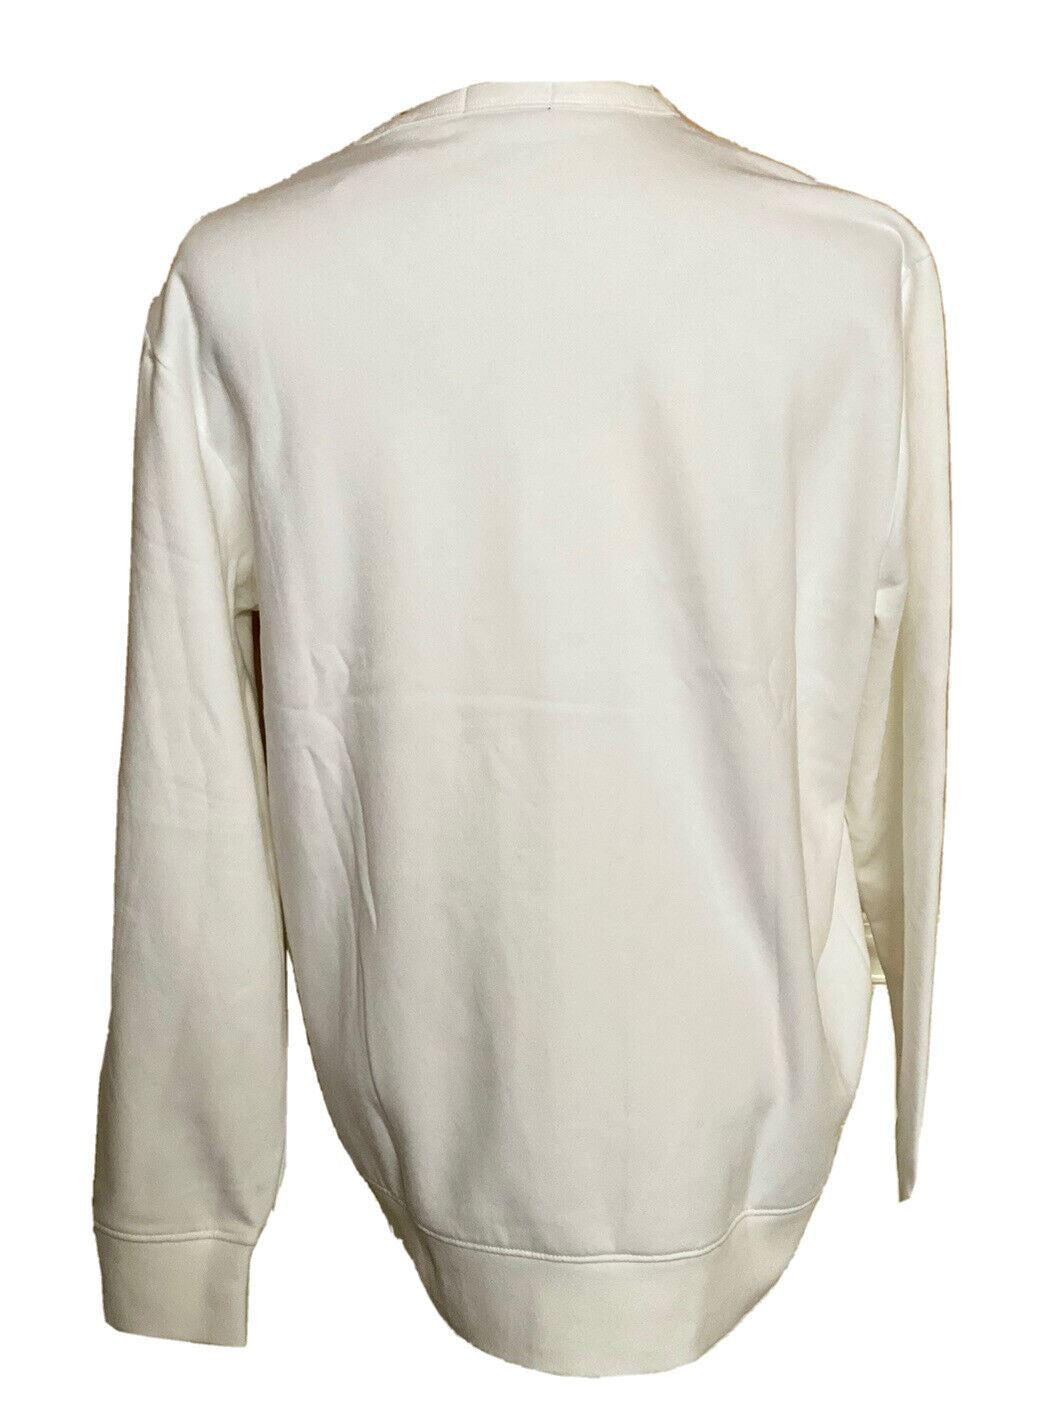 NWT $110 Polo Ralph Lauren Polo Logo Fleece Sweatshirt White XL/TG